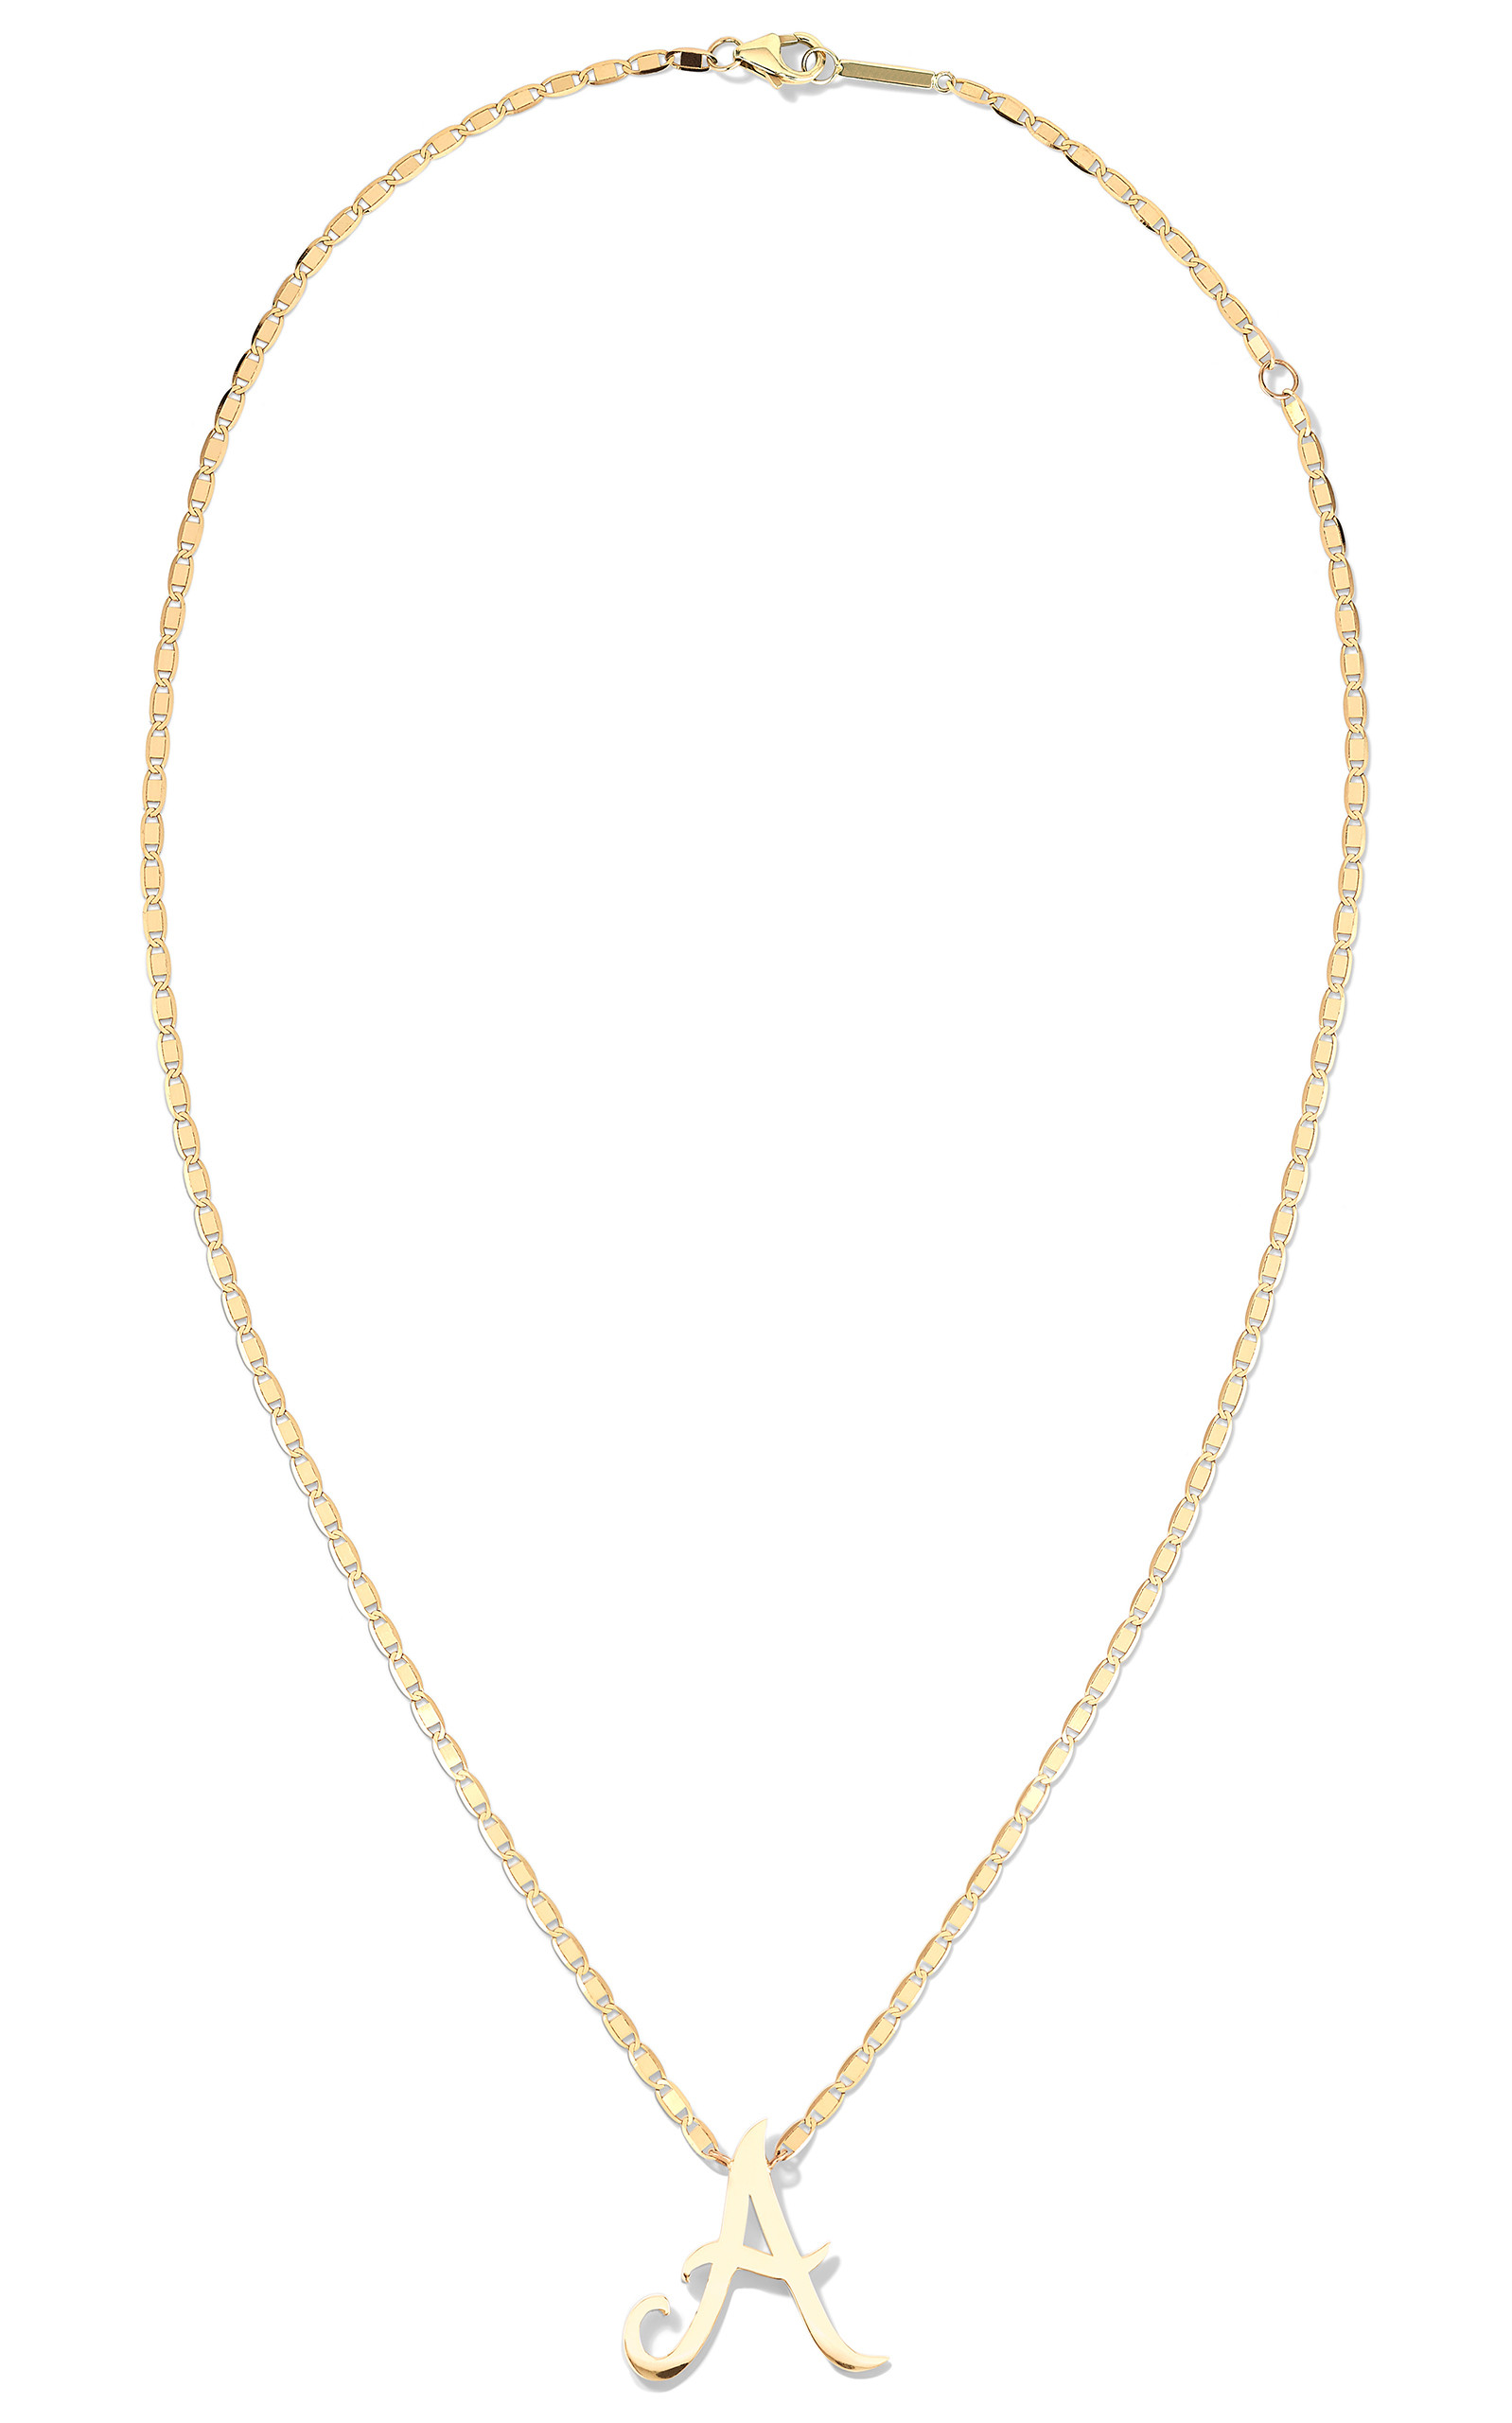 Lana Malibu Initial Necklace in 14K Gold 